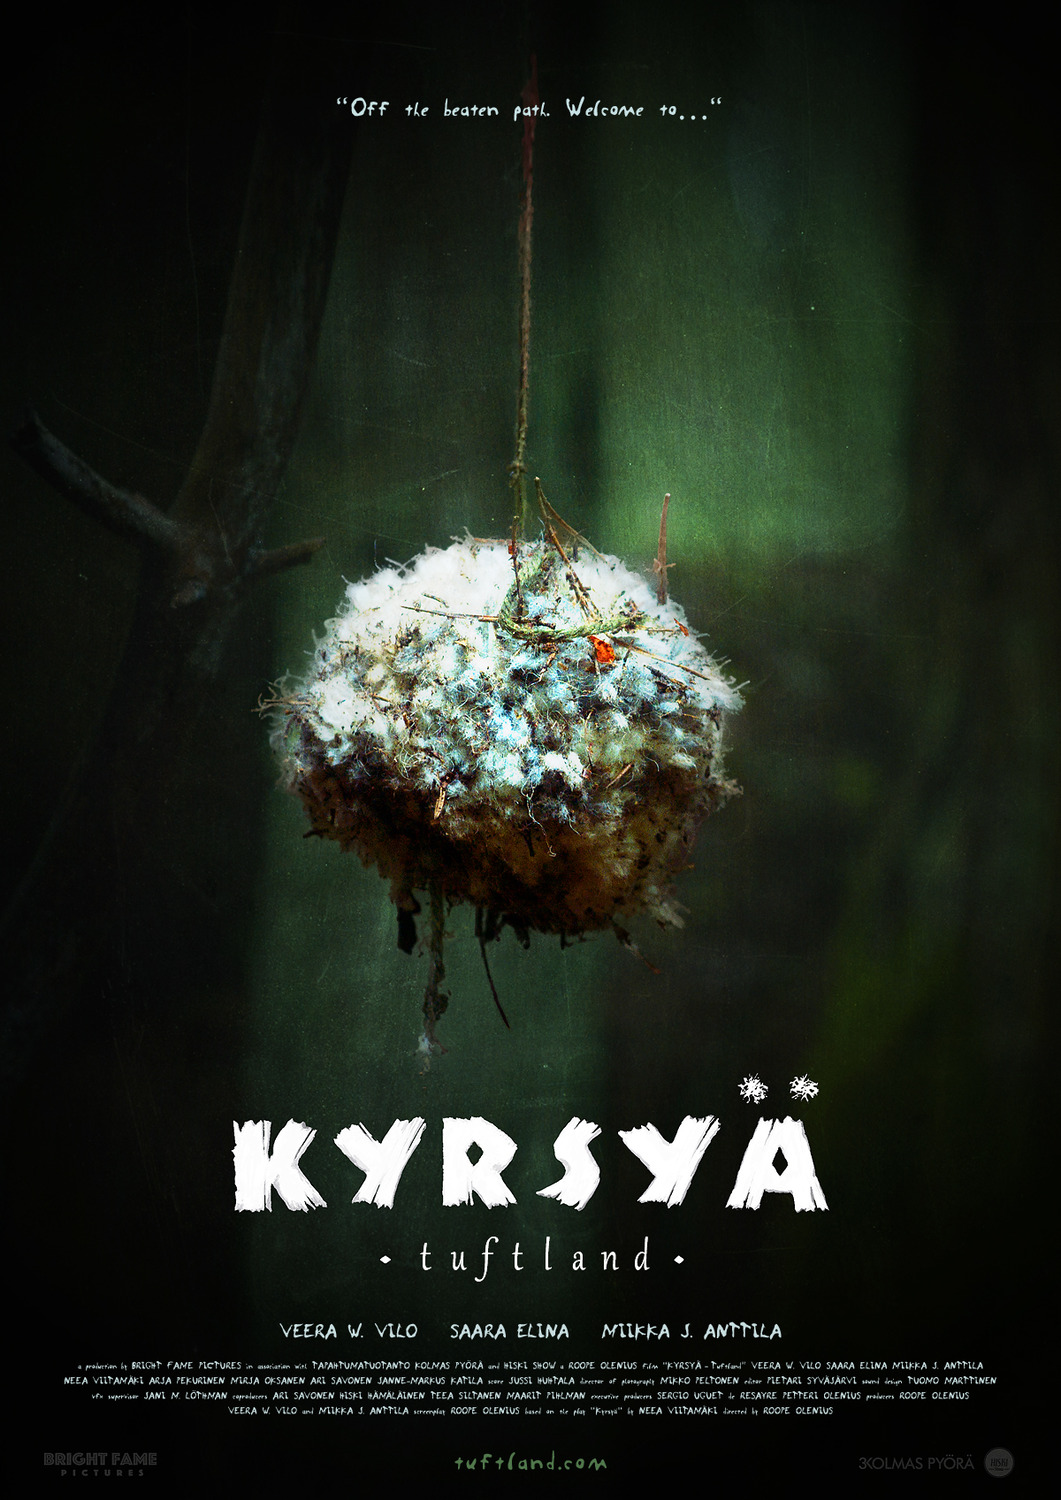 Extra Large Movie Poster Image for Kyrsyä - Tuftland 